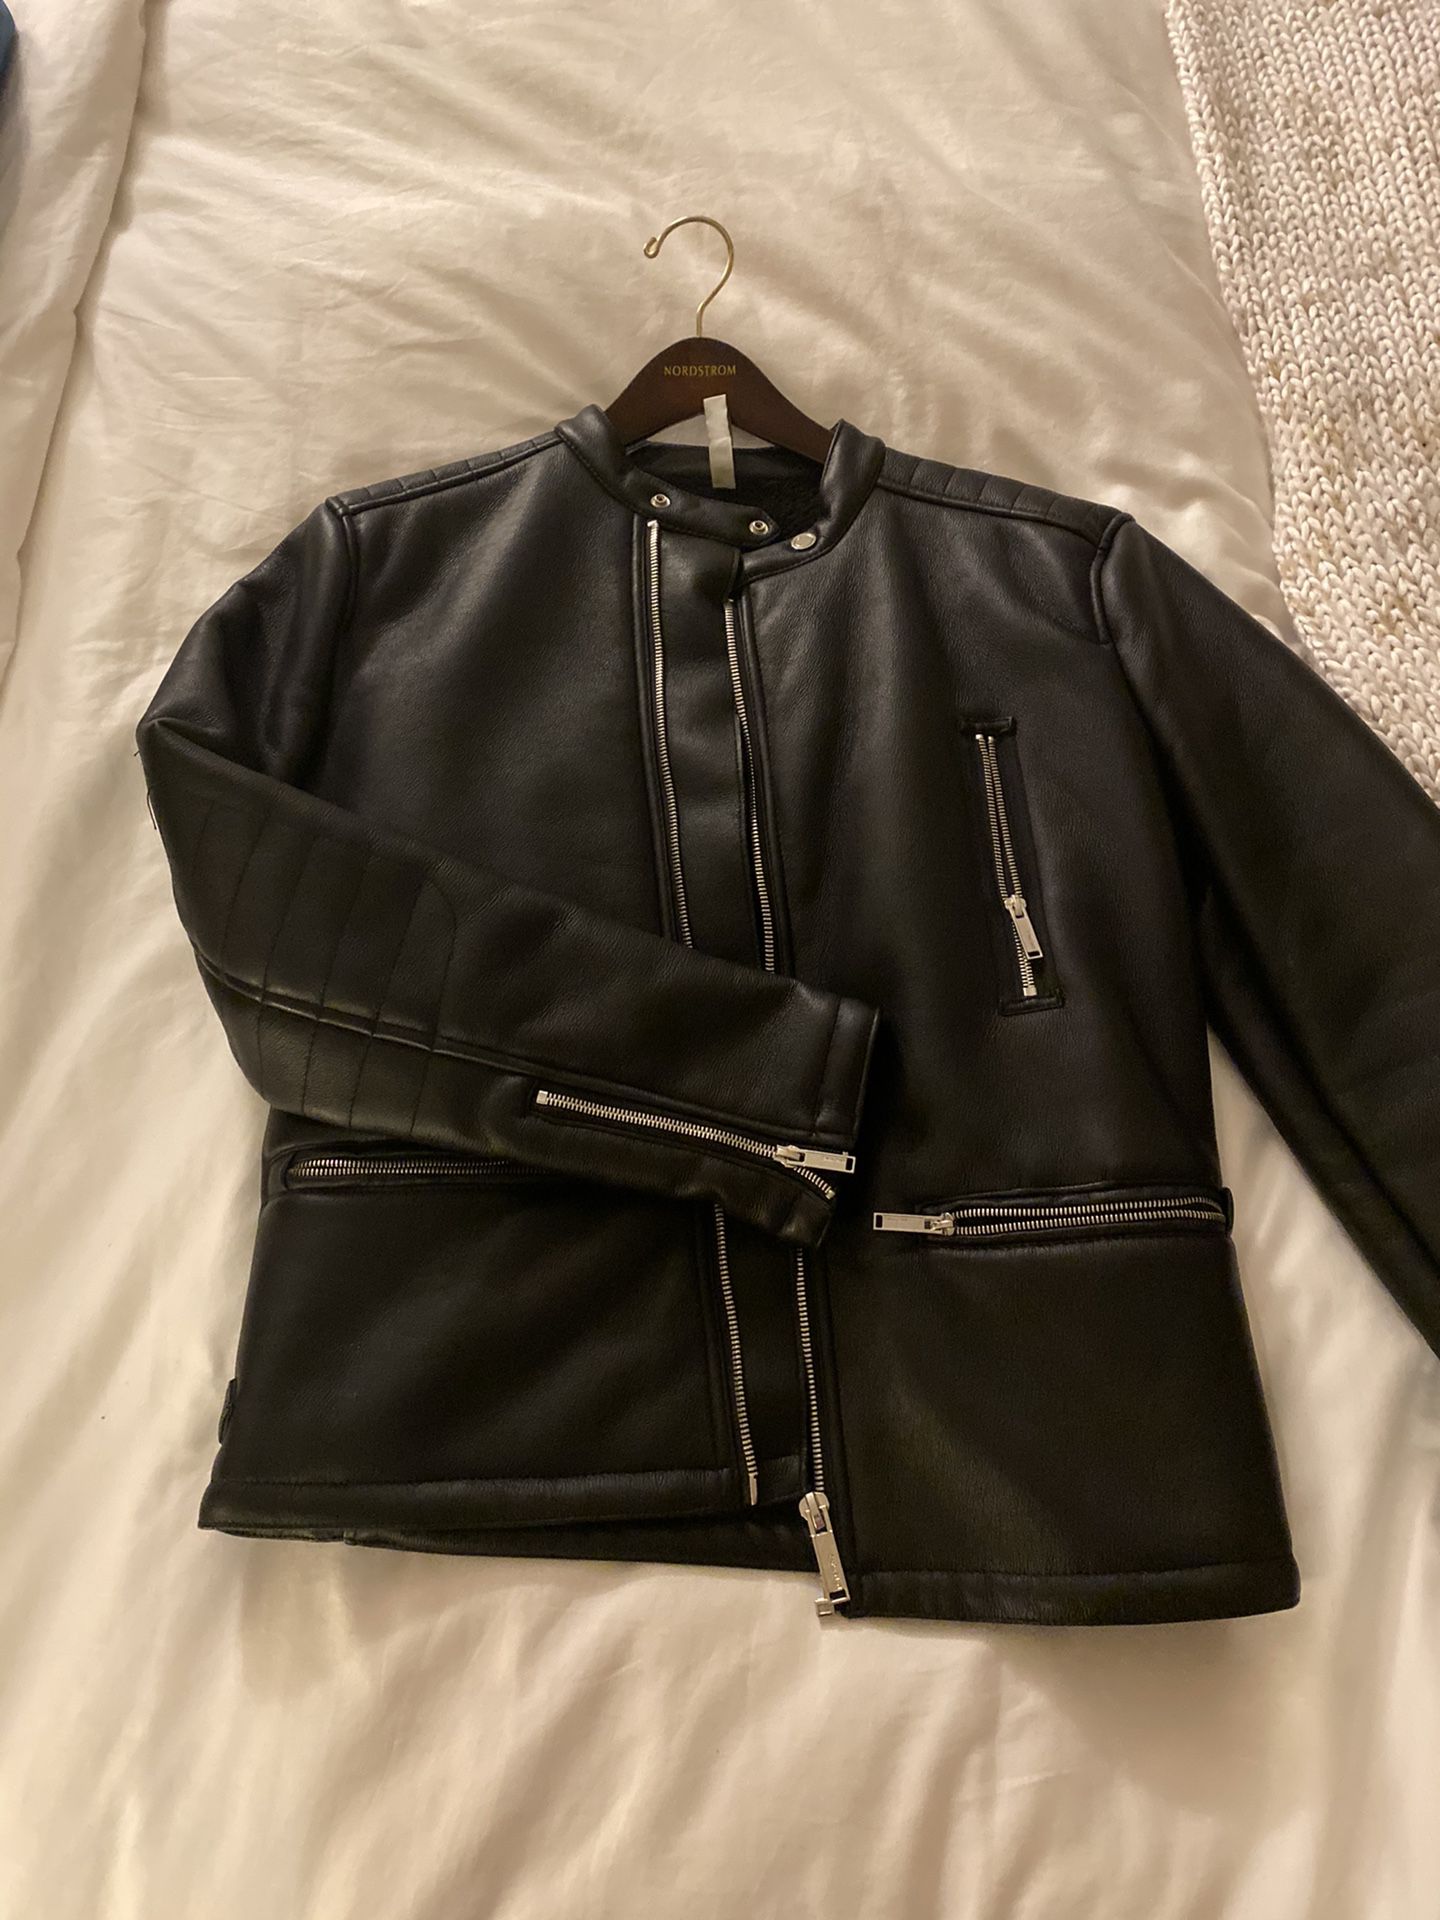 ZARA Men’s Leather jacket, worn one time, size M